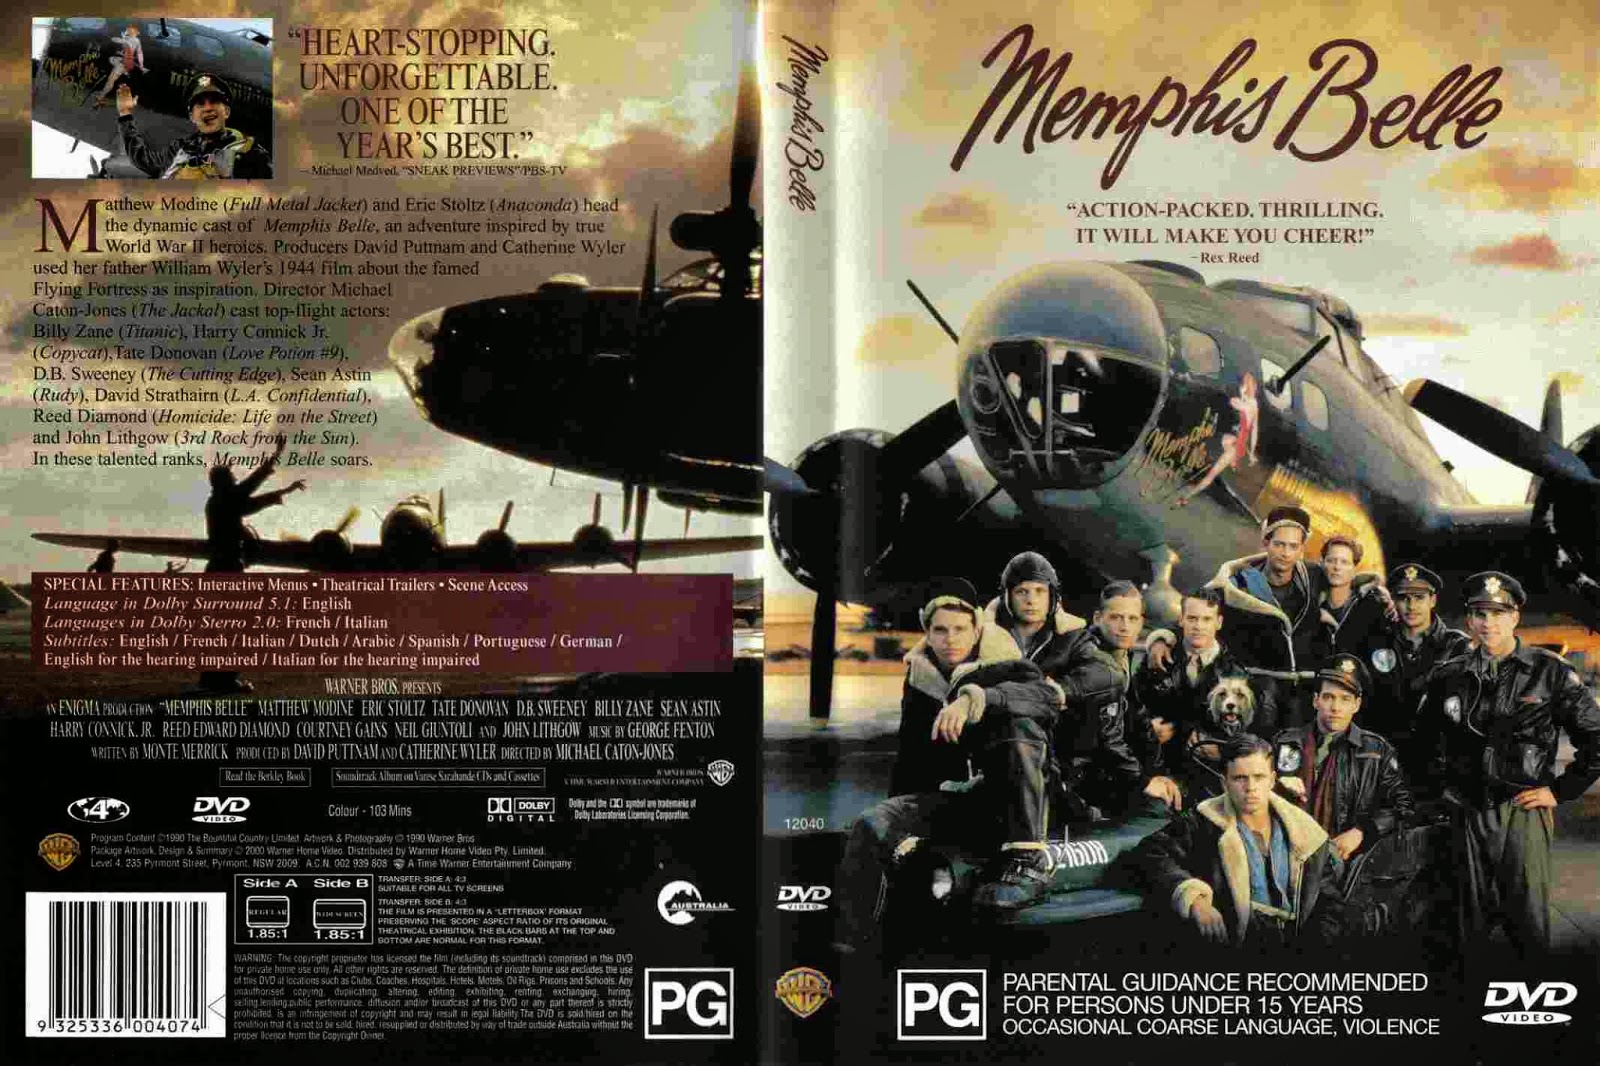 NAZI JERMAN: Dijual! DVD Film Nazi - Luftwaffe dan Perang 